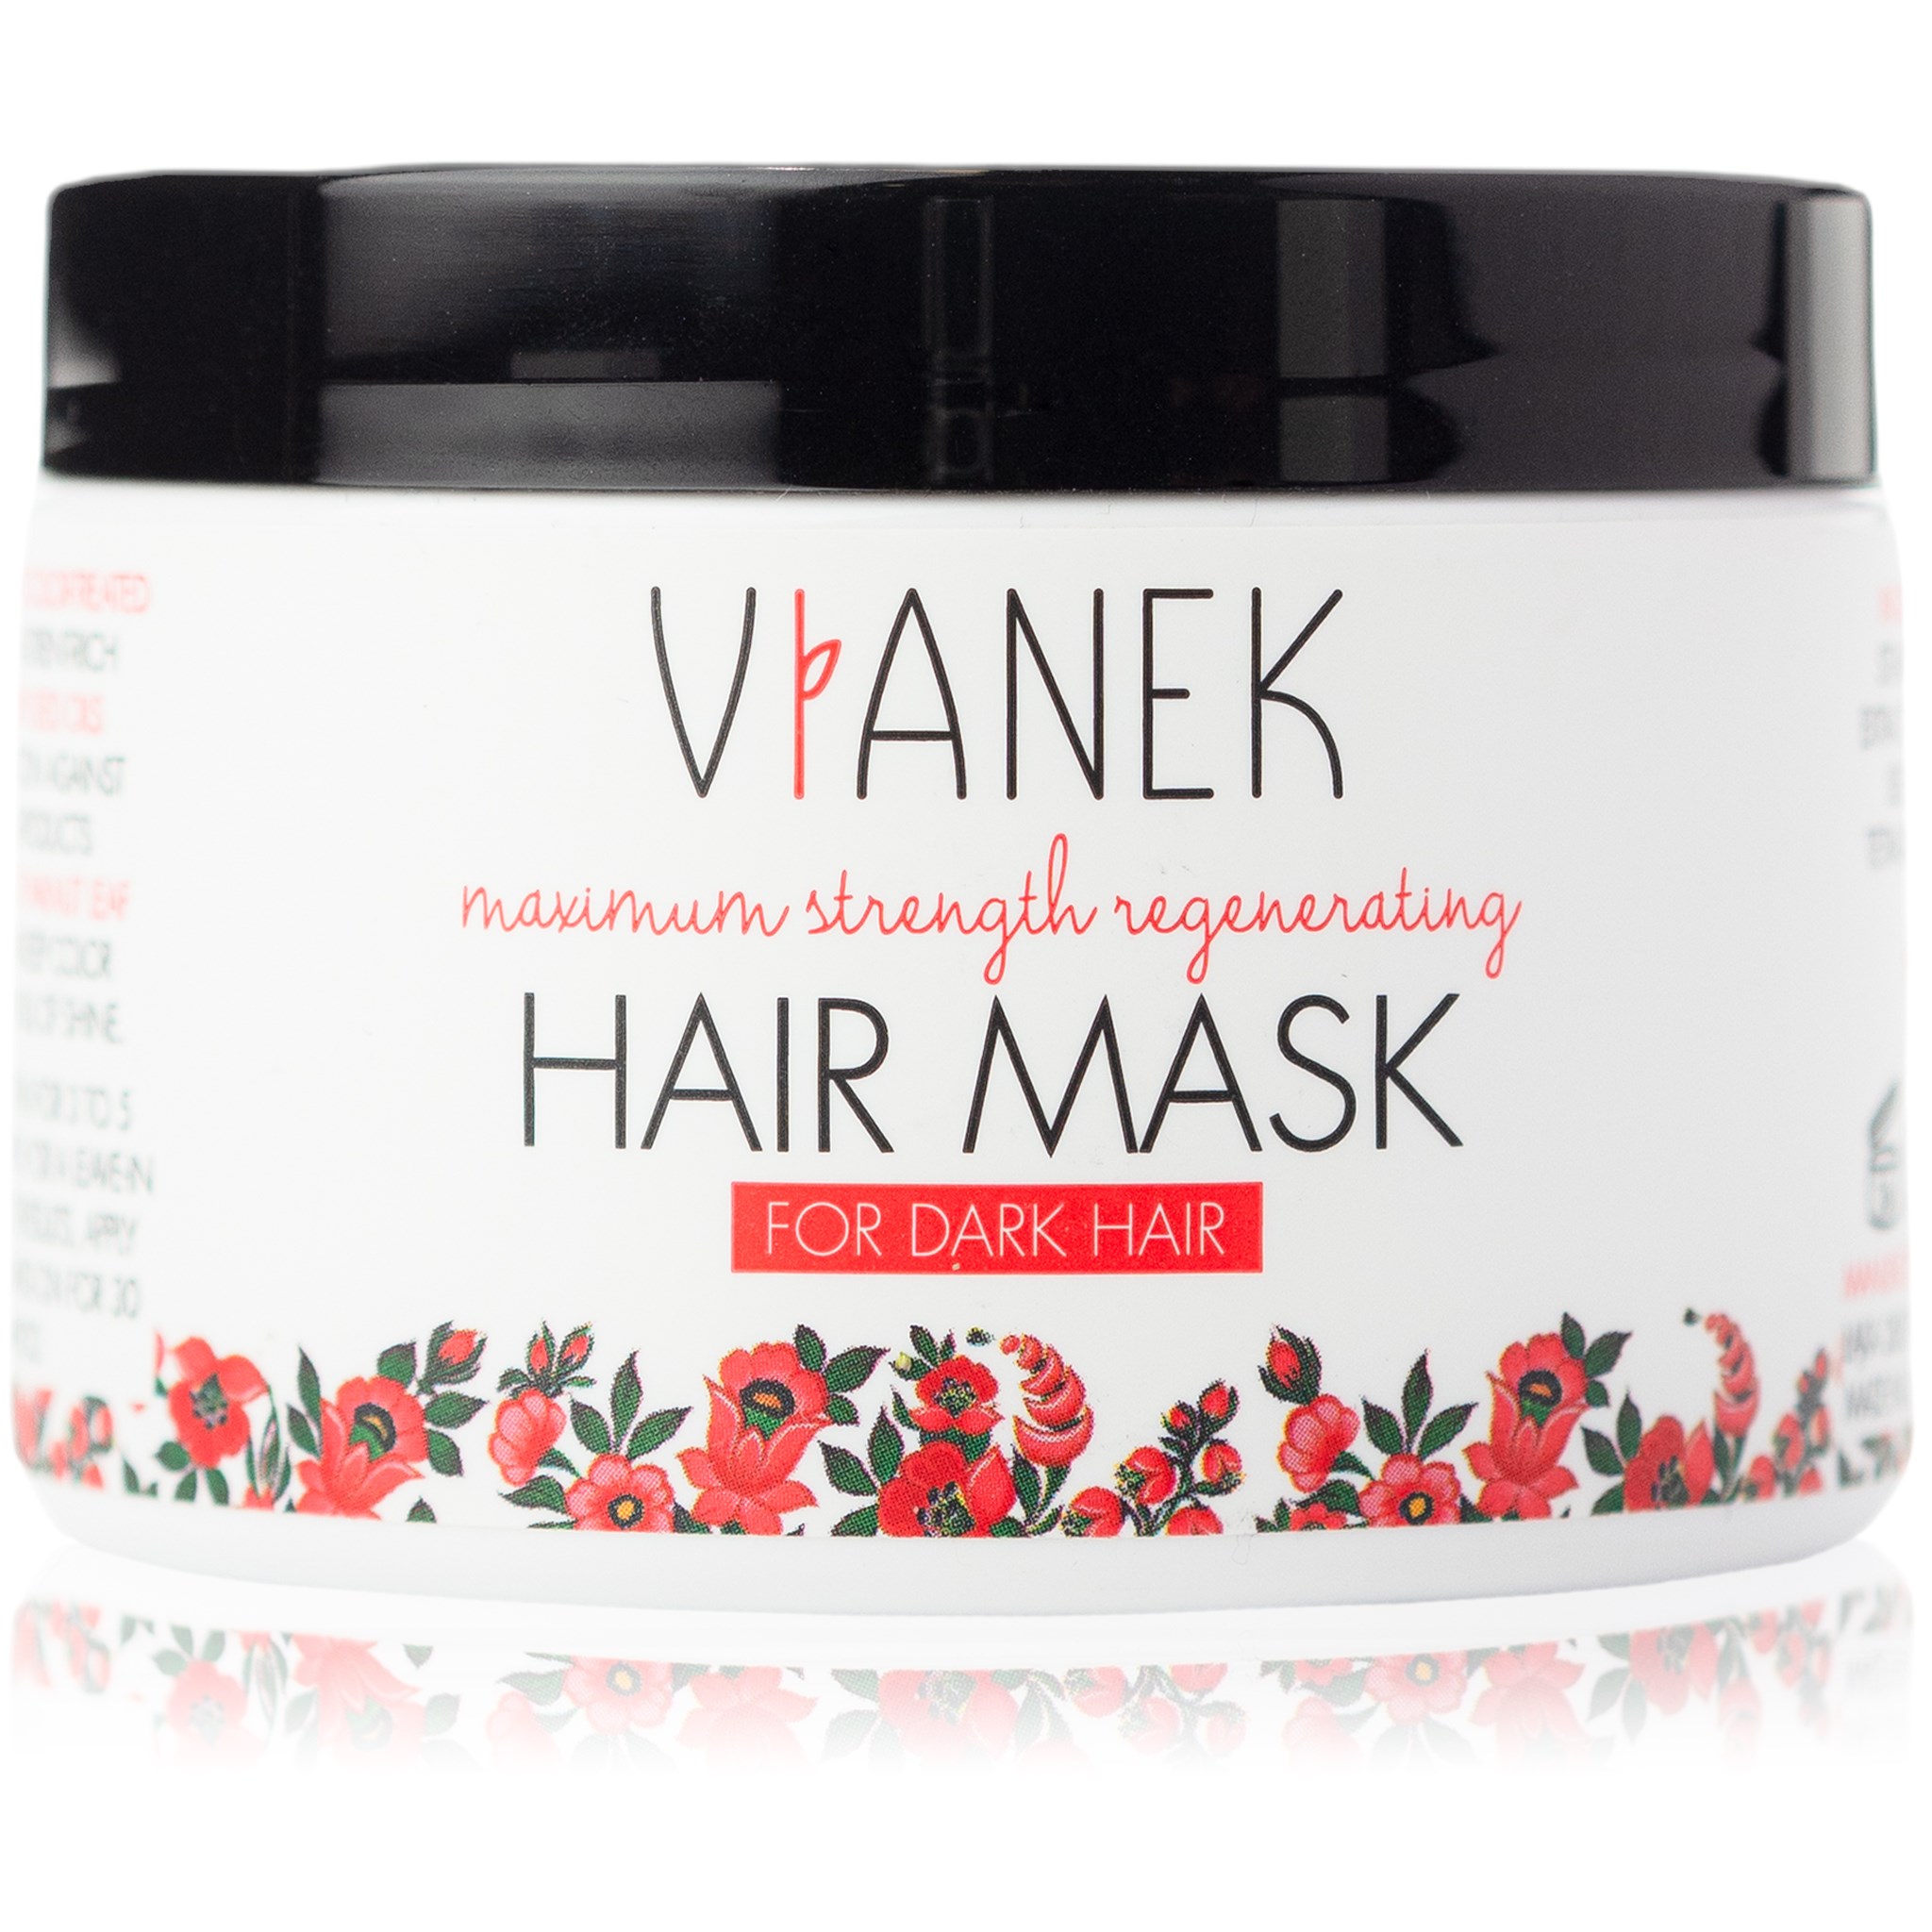 VIANEK Regenerating Maximum Strength Mask for Dark Hair 150 ml